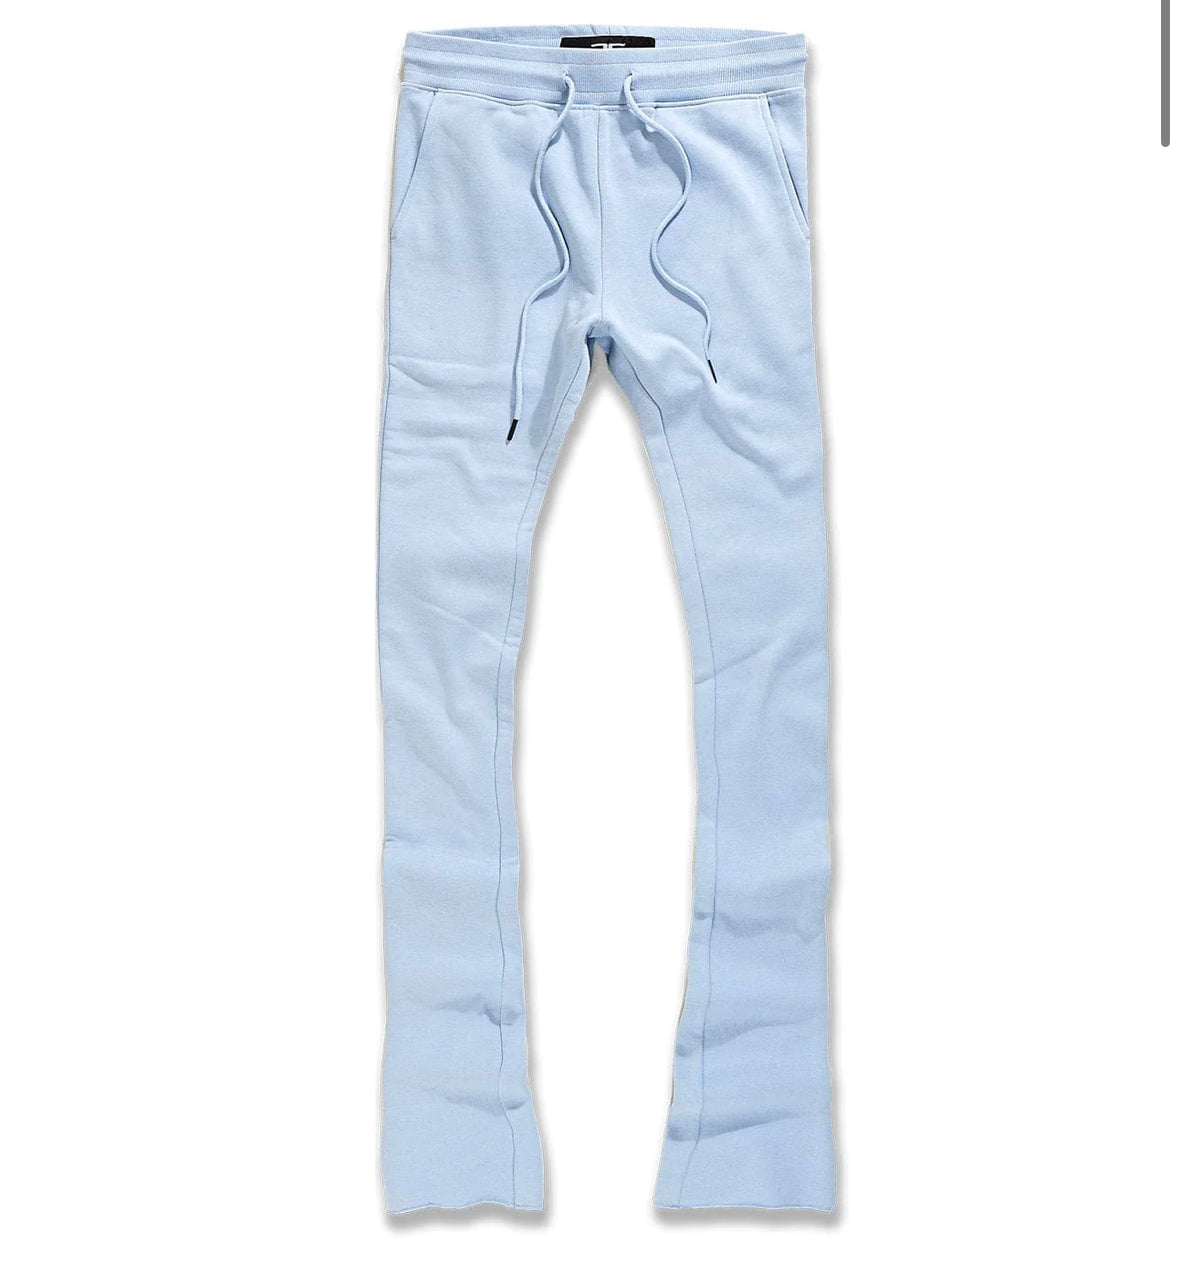 Blue Pants  Caralina Style